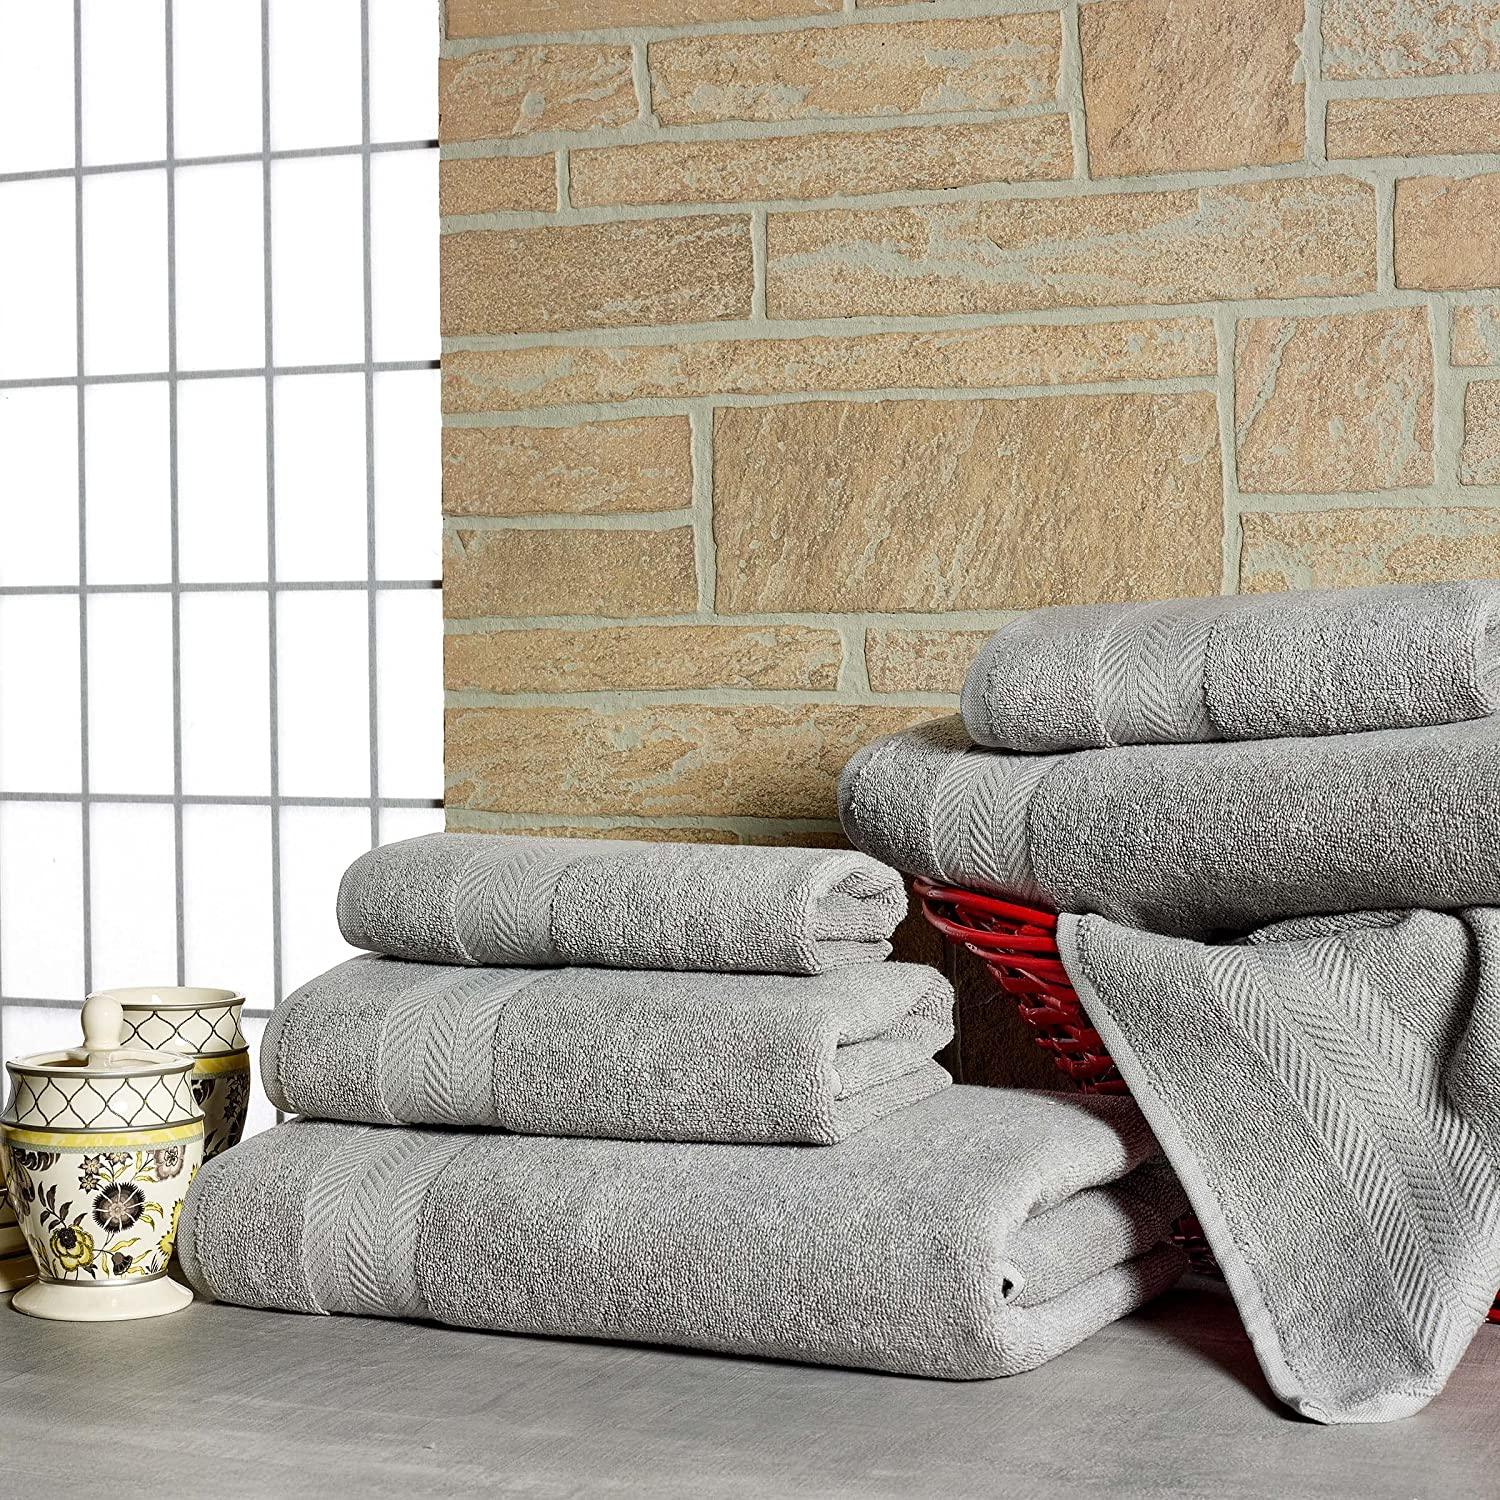 Luxury 100% Cotton Bath Towels - 6 Piece Set, Extra Soft & Fluffy, Hotel Bath  Towel Set - 2 Bathroom Towels, 2 Hand Towels & 2 Washcloths - Charcoal Gray  